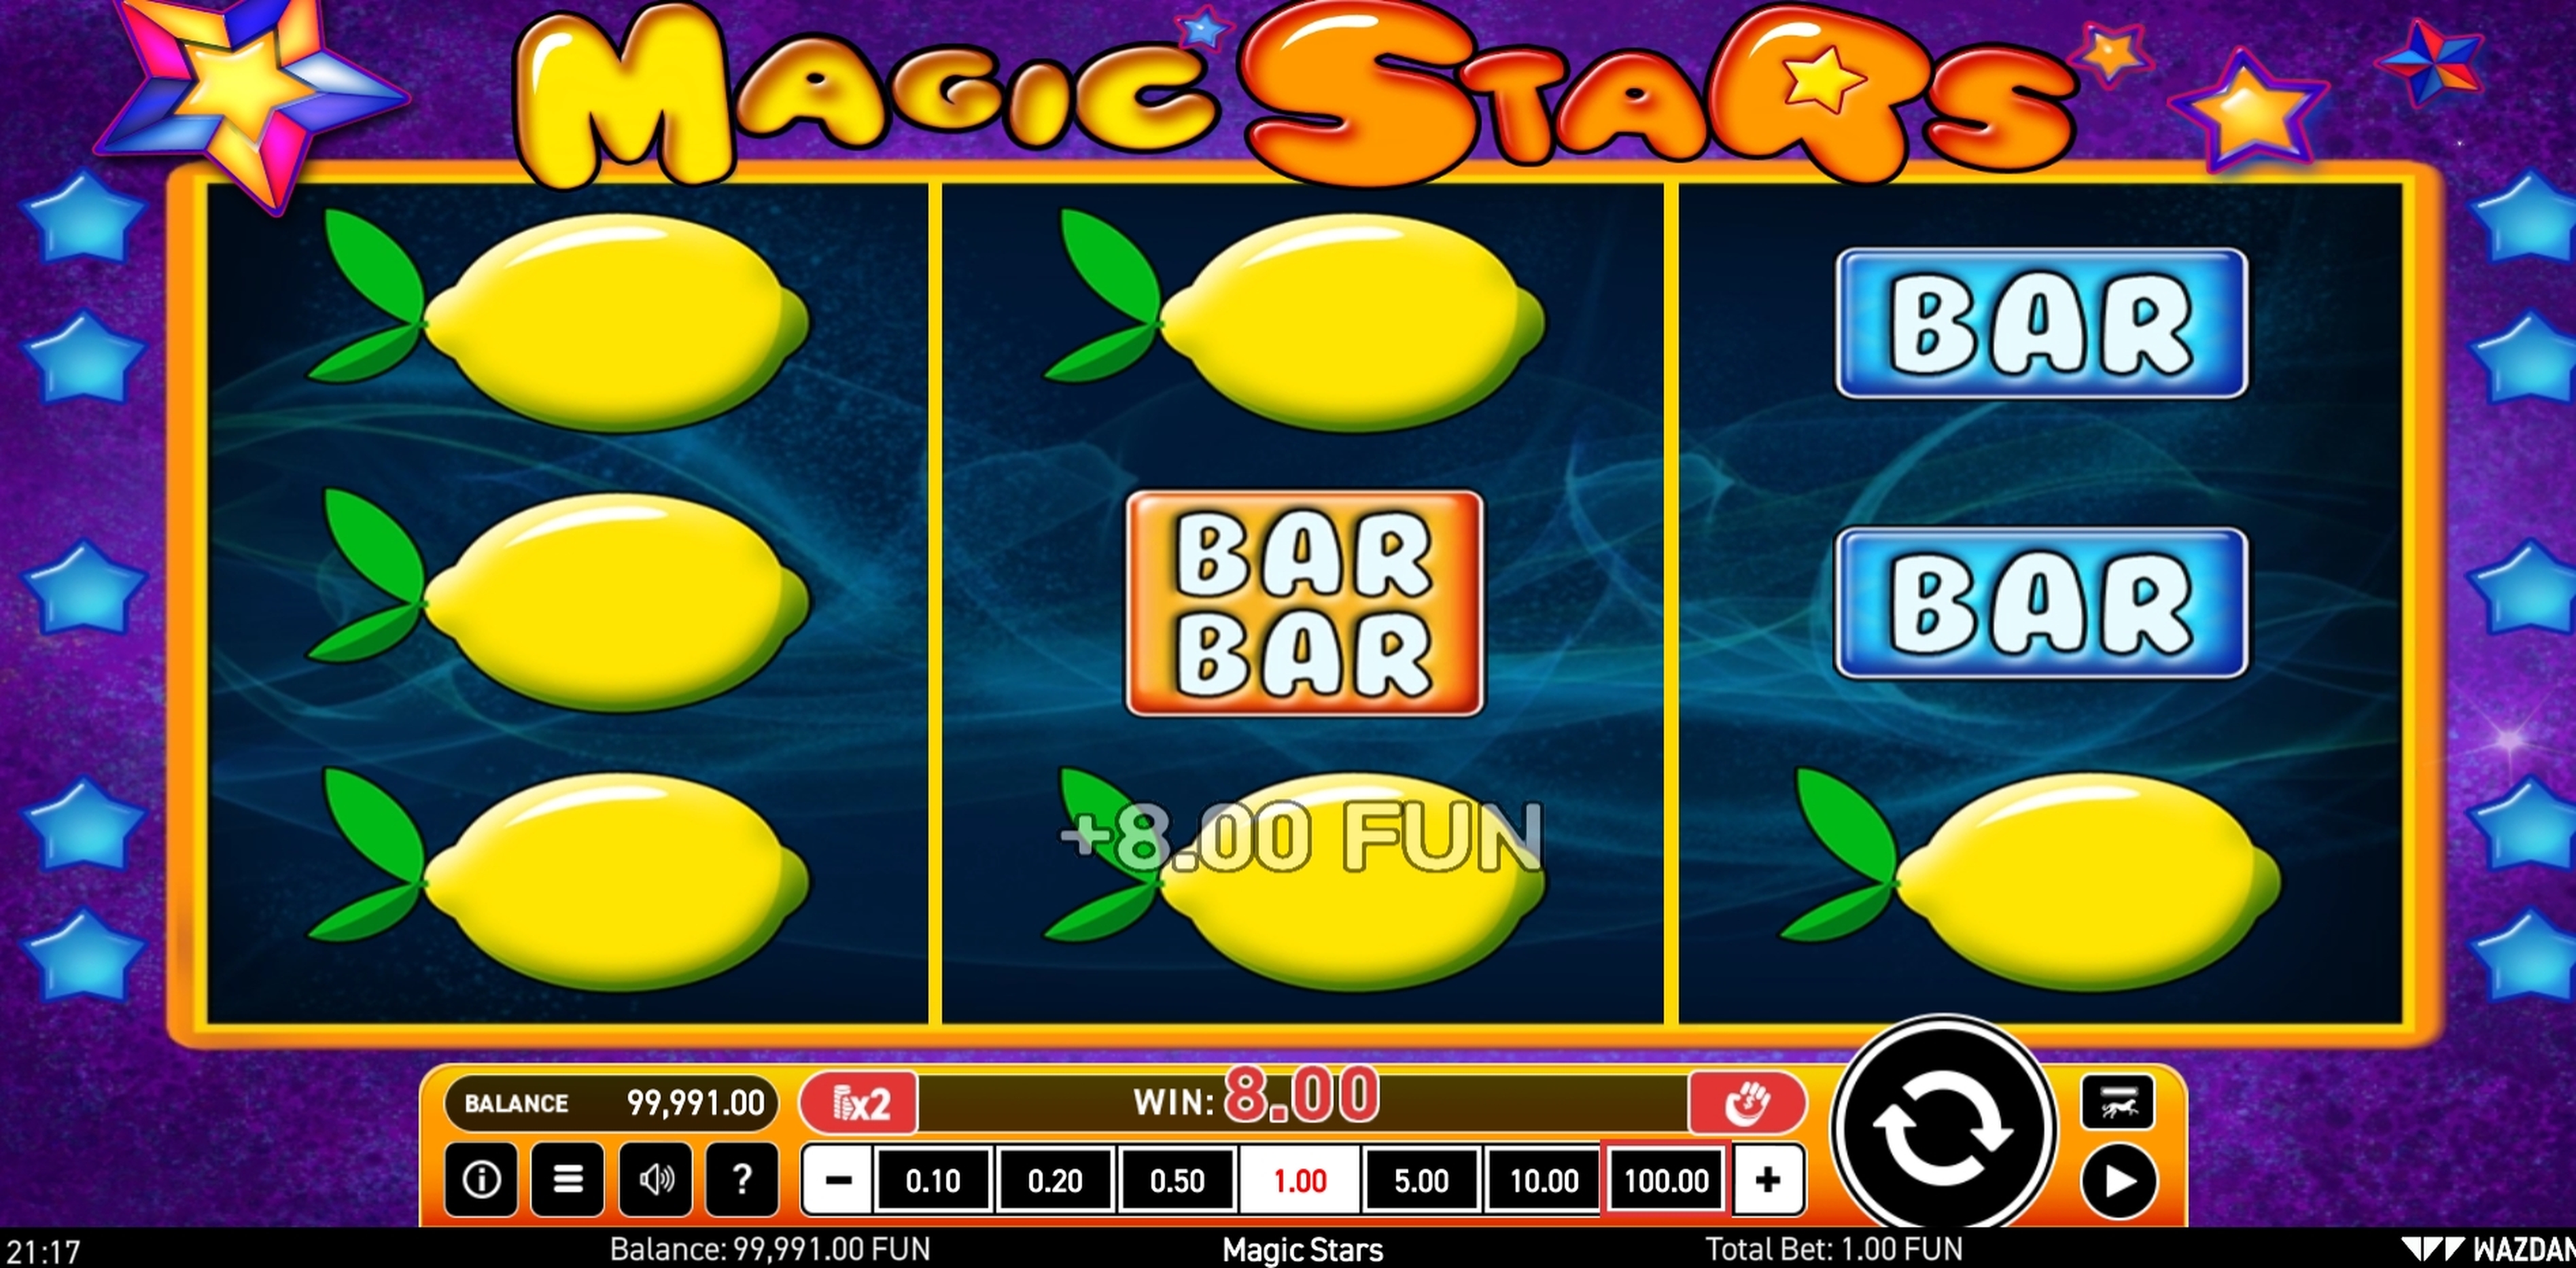 Win Money in Magic Stars Free Slot Game by Wazdan